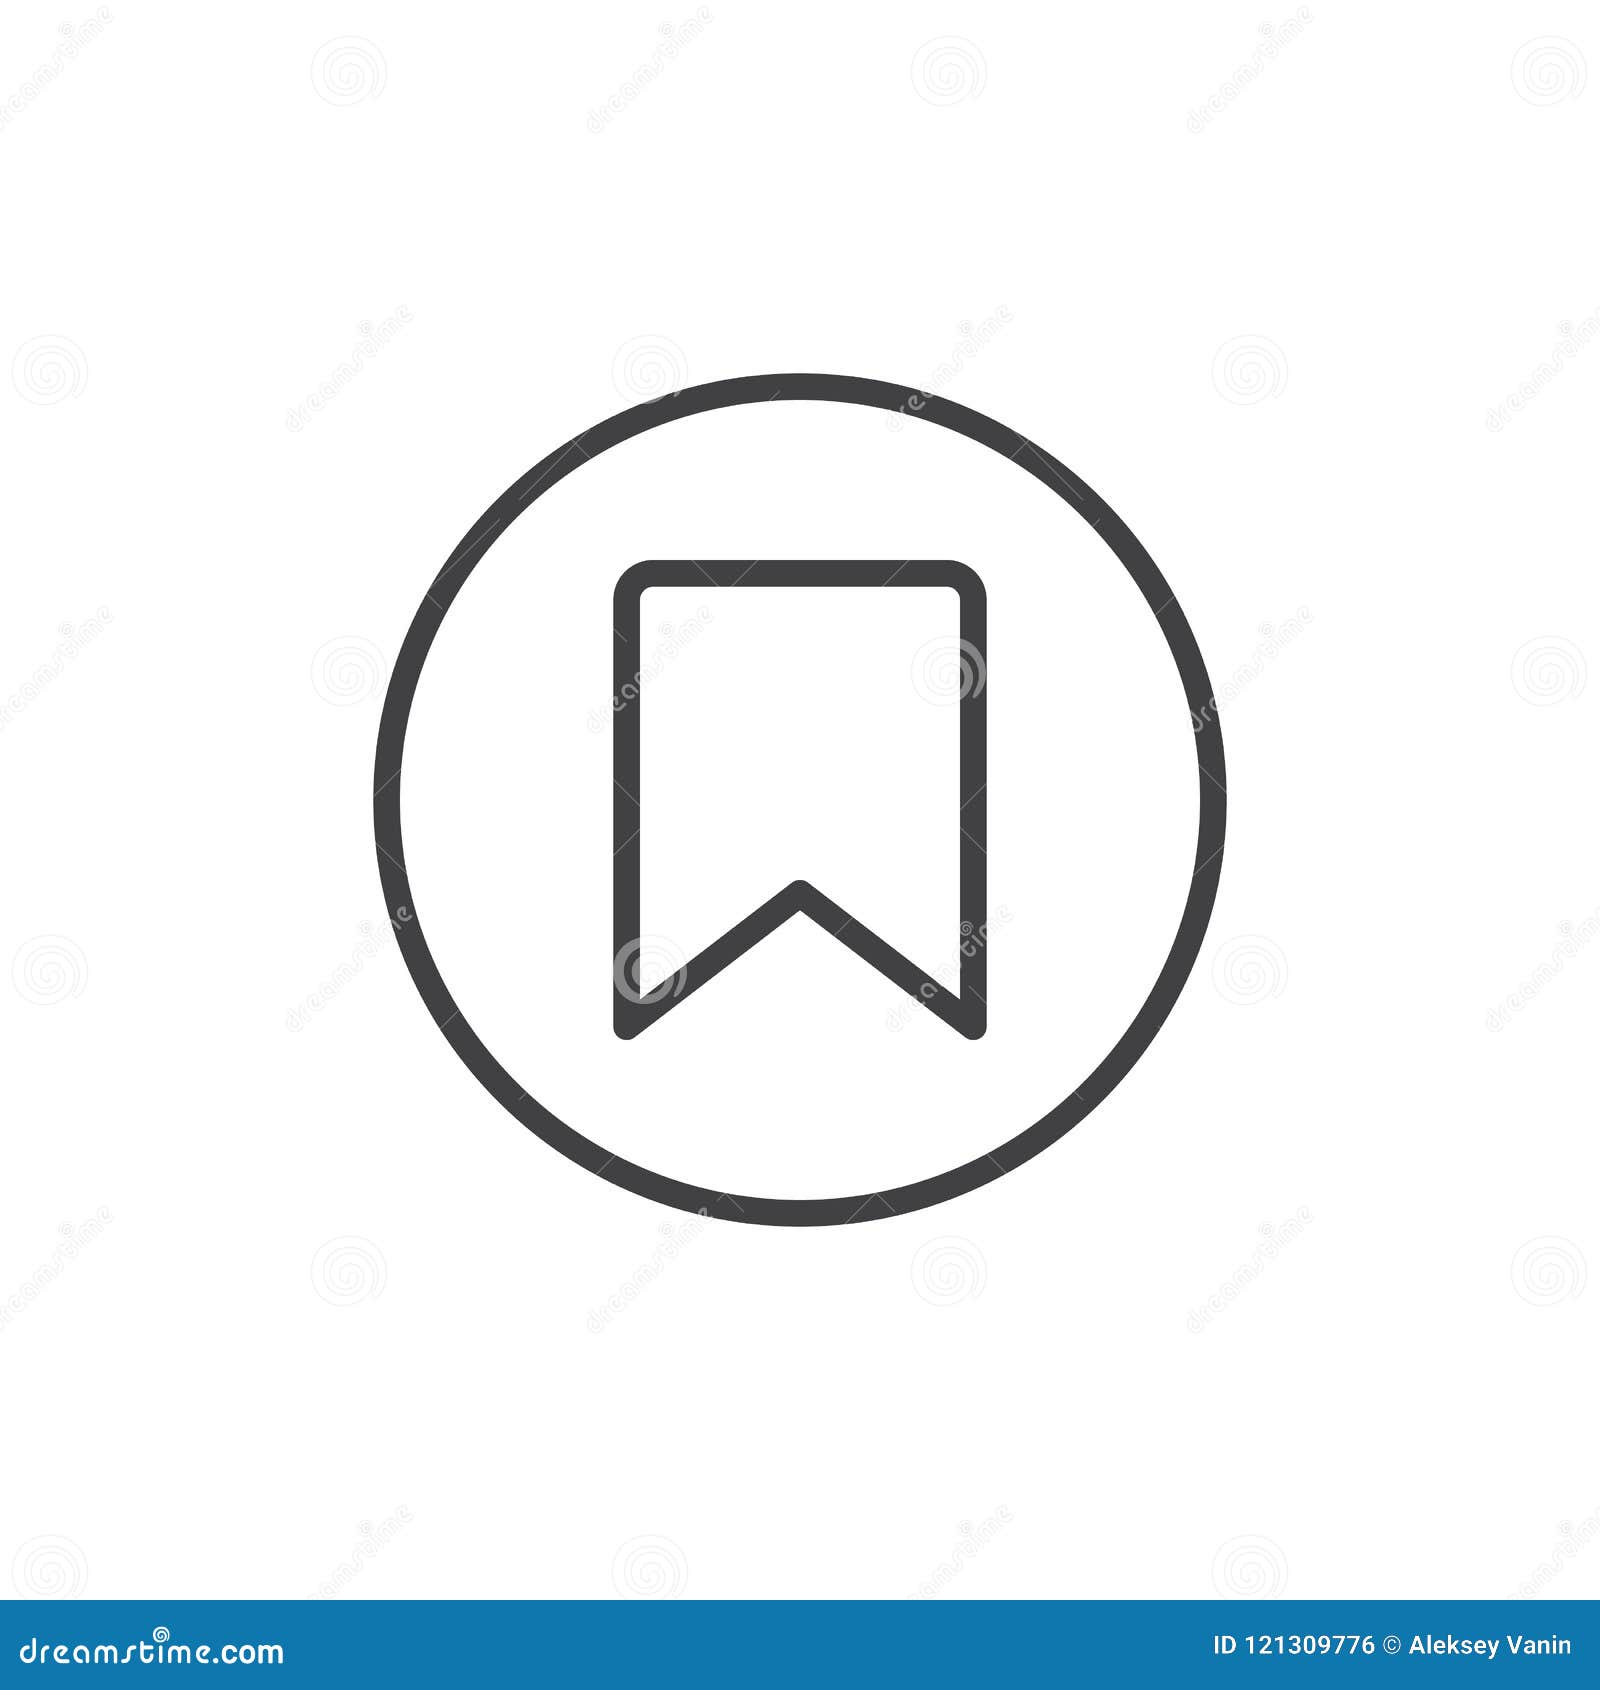 bookmark outline icon